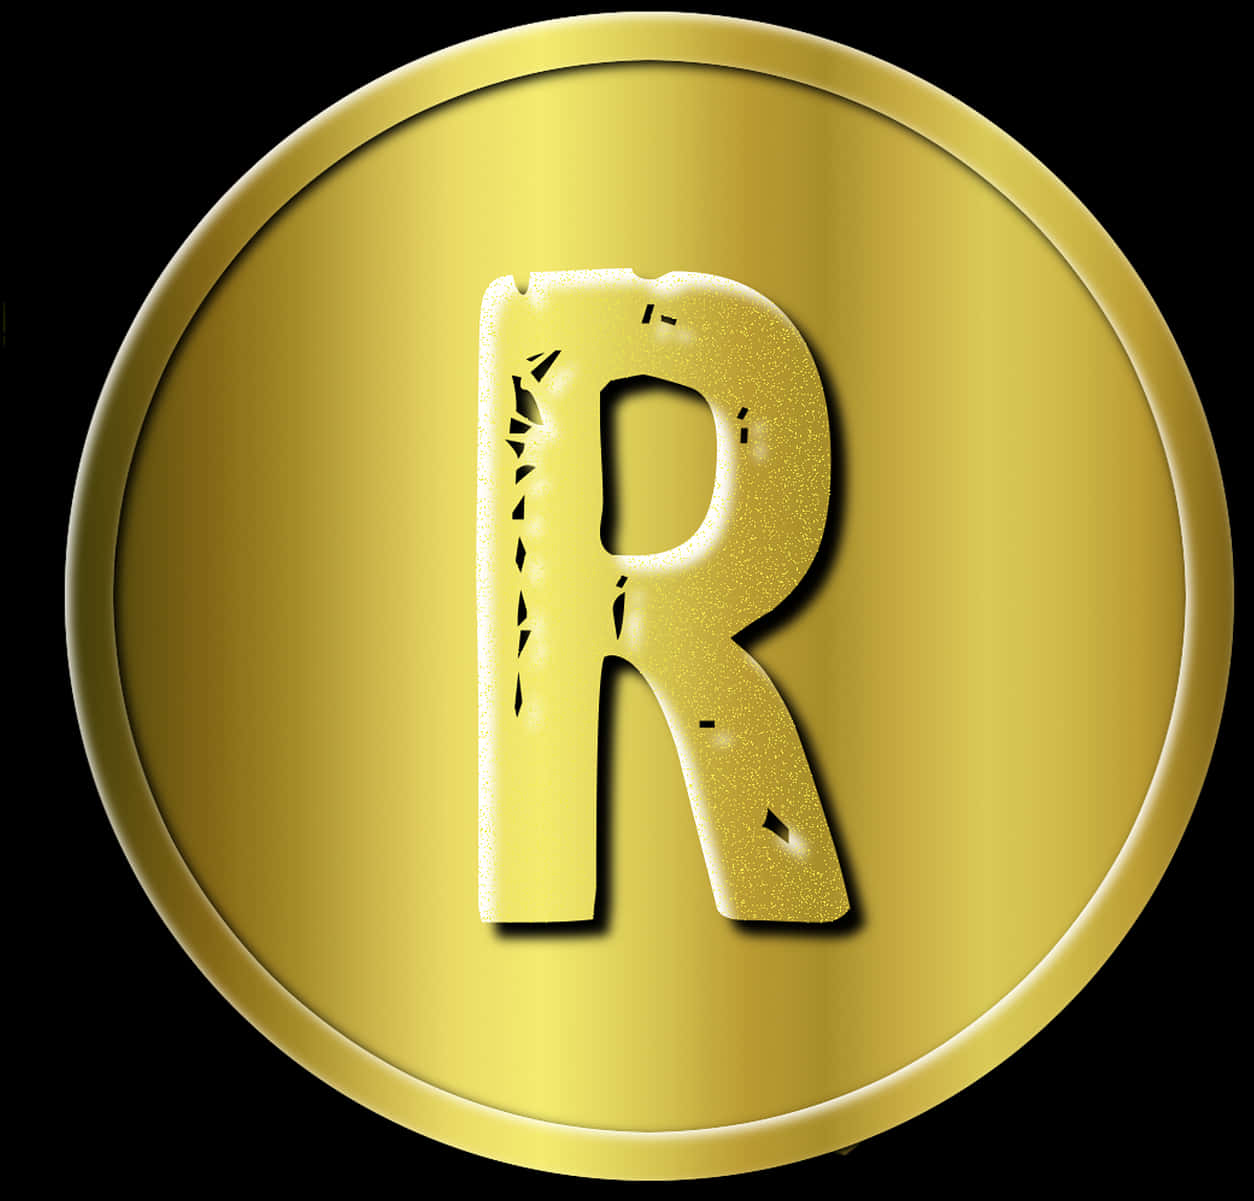 Golden R Symbol Circle PNG image